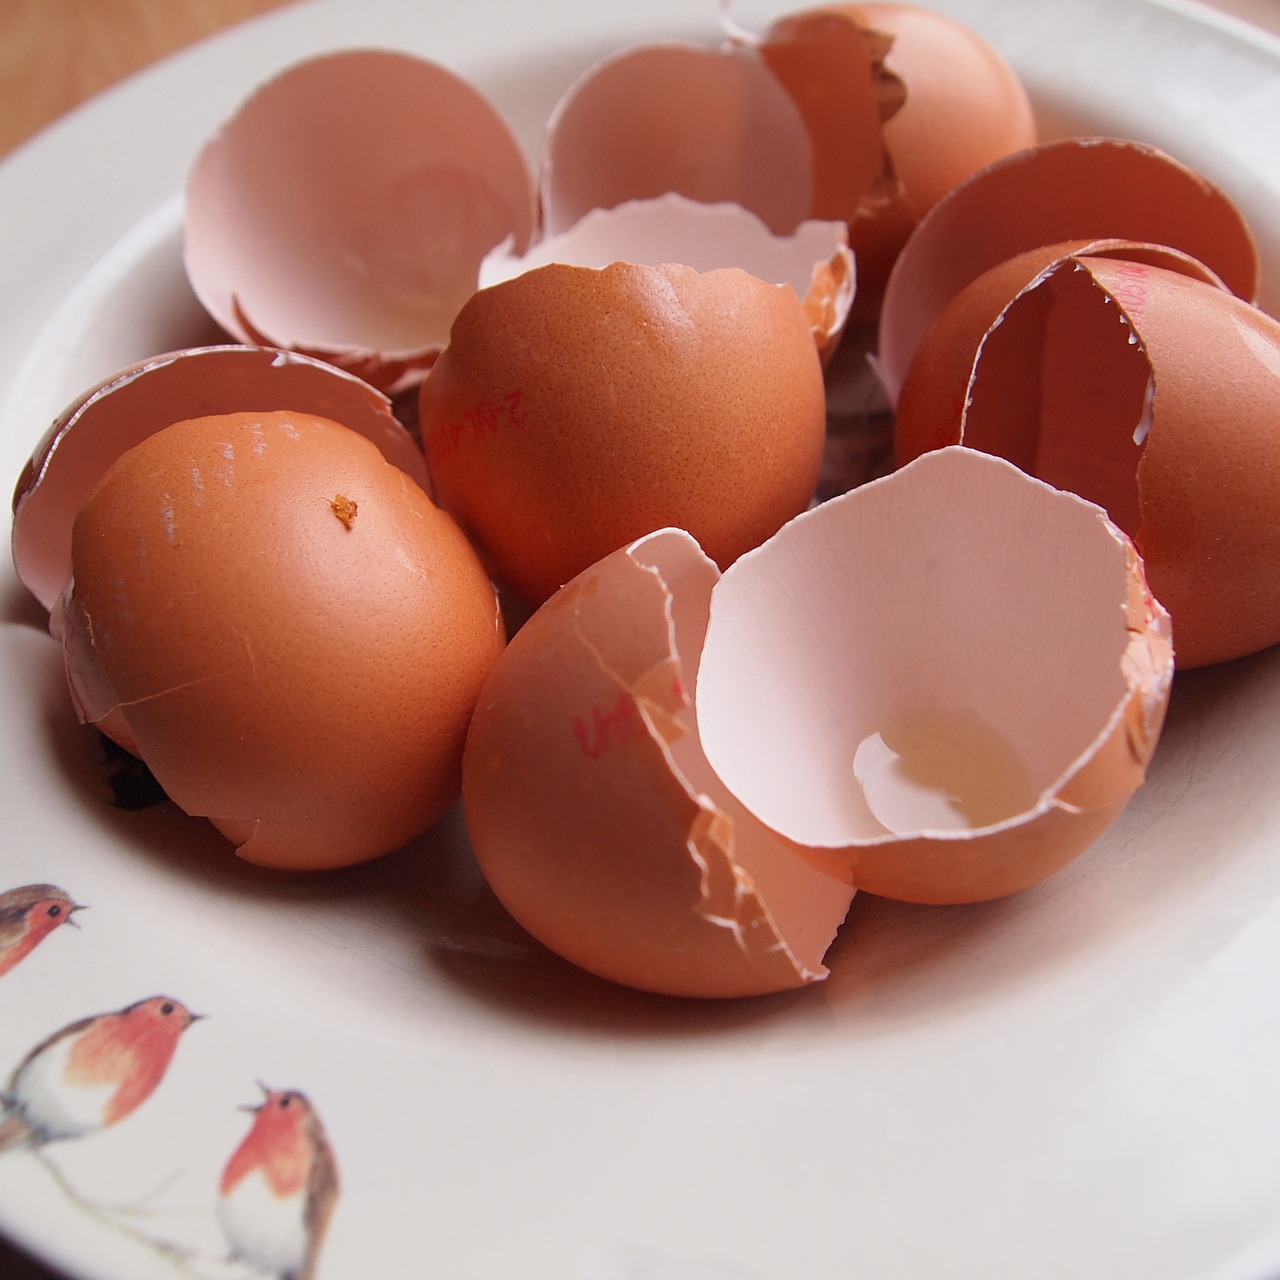 Feeding Back Eggs Shells to Laying Hens